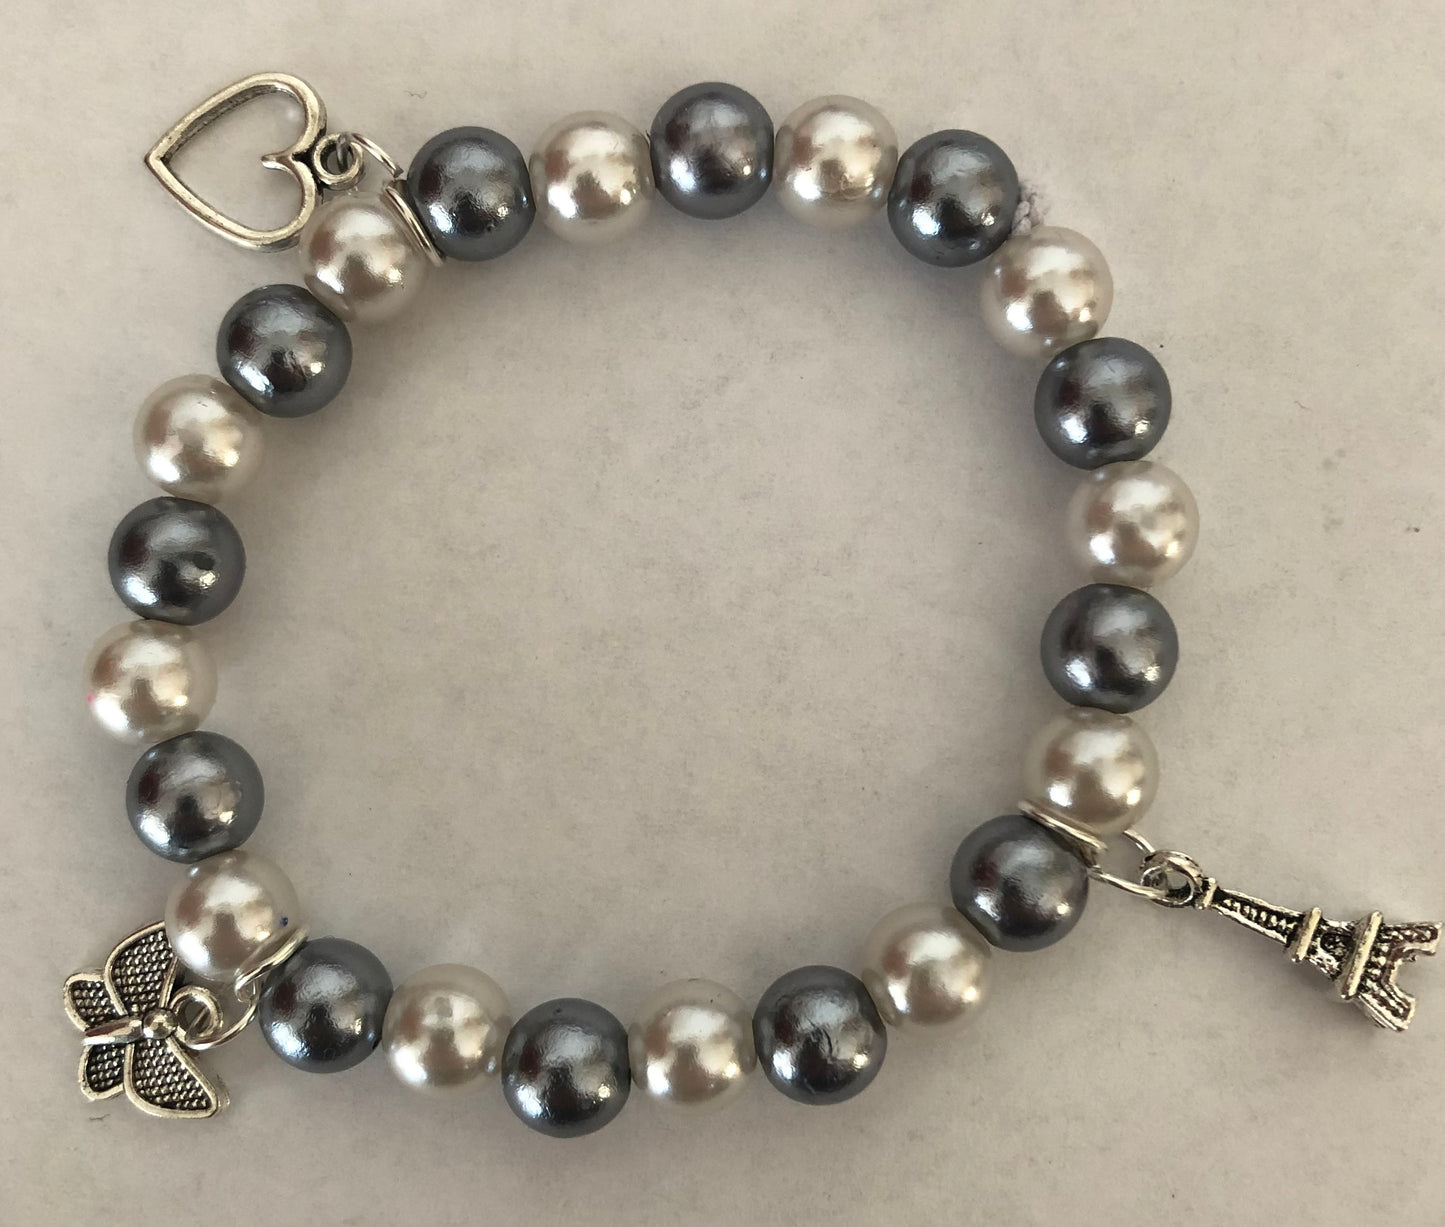 Jewelry set | Charm bracelet, charm beaded bracelet and hoops